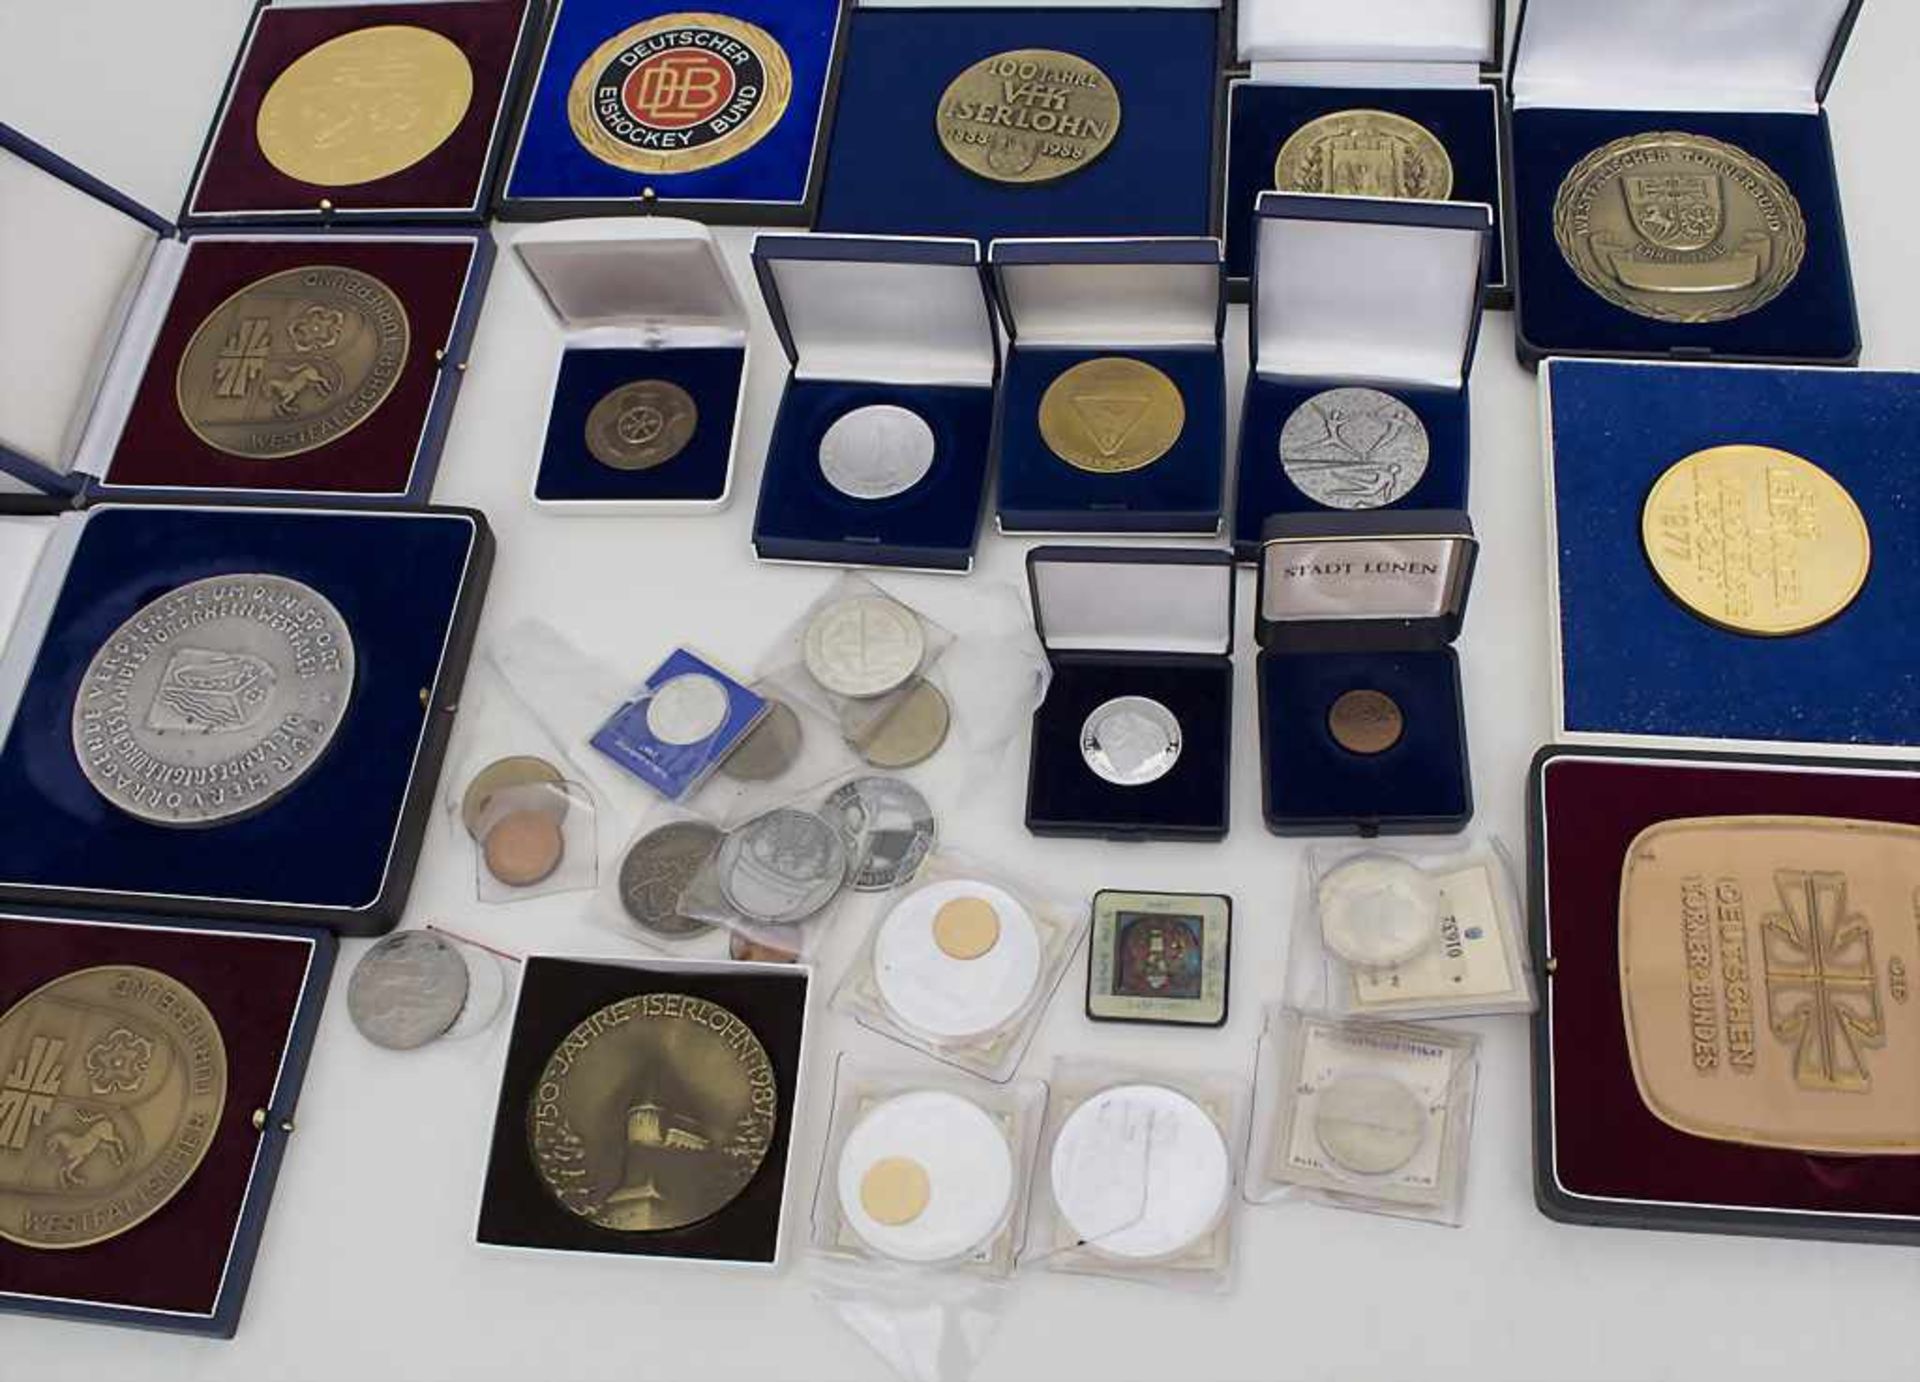 Sammlung Medaillen und Plaketten / A collection of medals and plaques